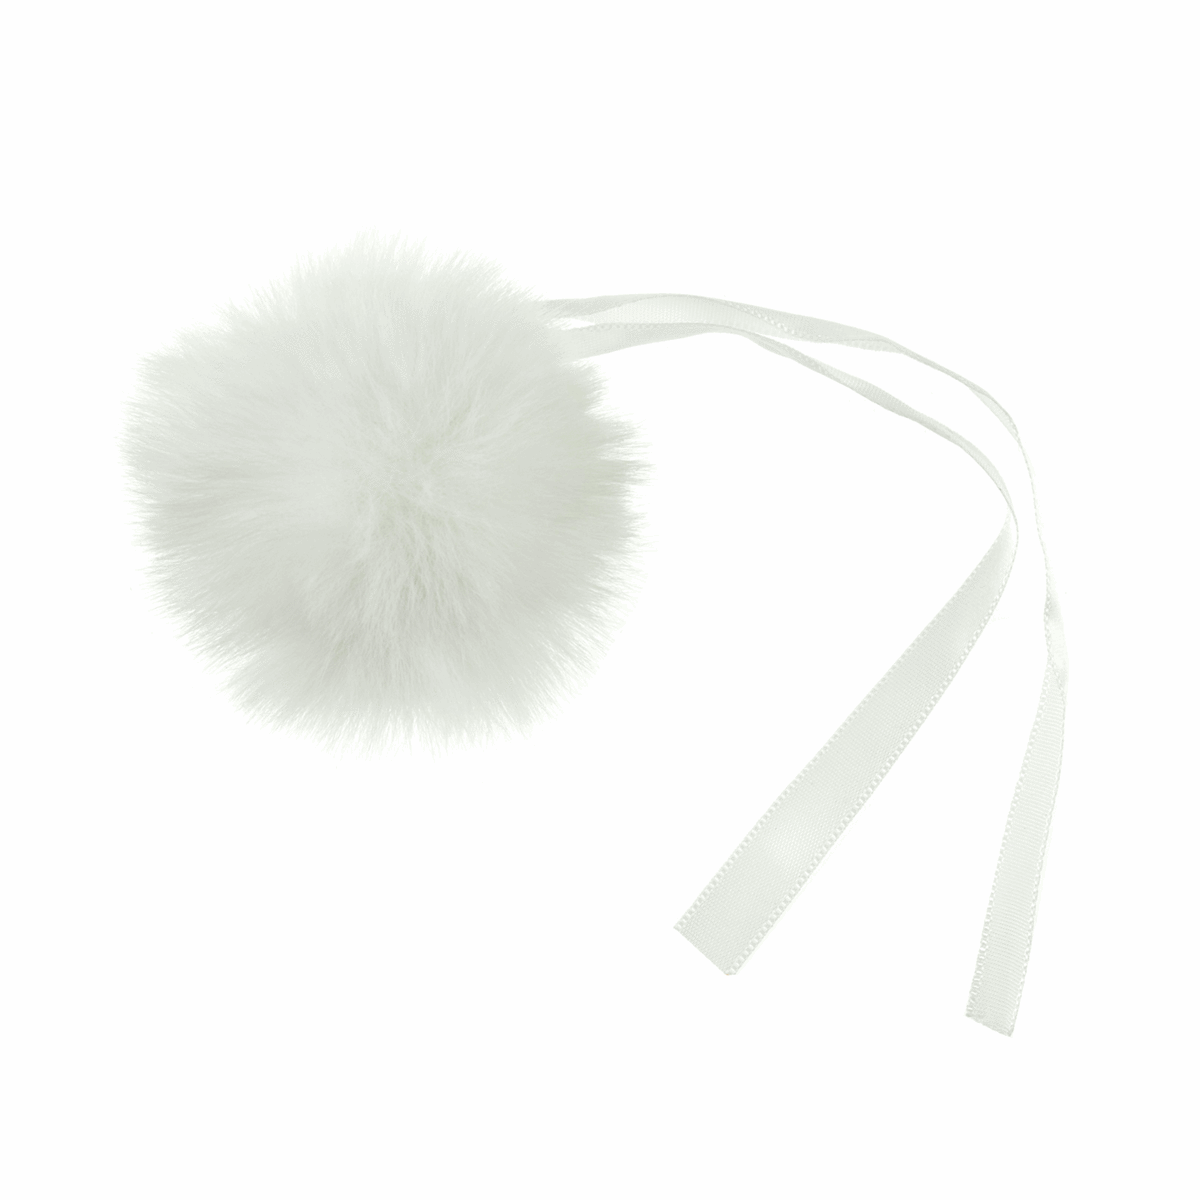 Trimits Faux Fur Super Fluffy Pom Pom - White 6cm (Medium)